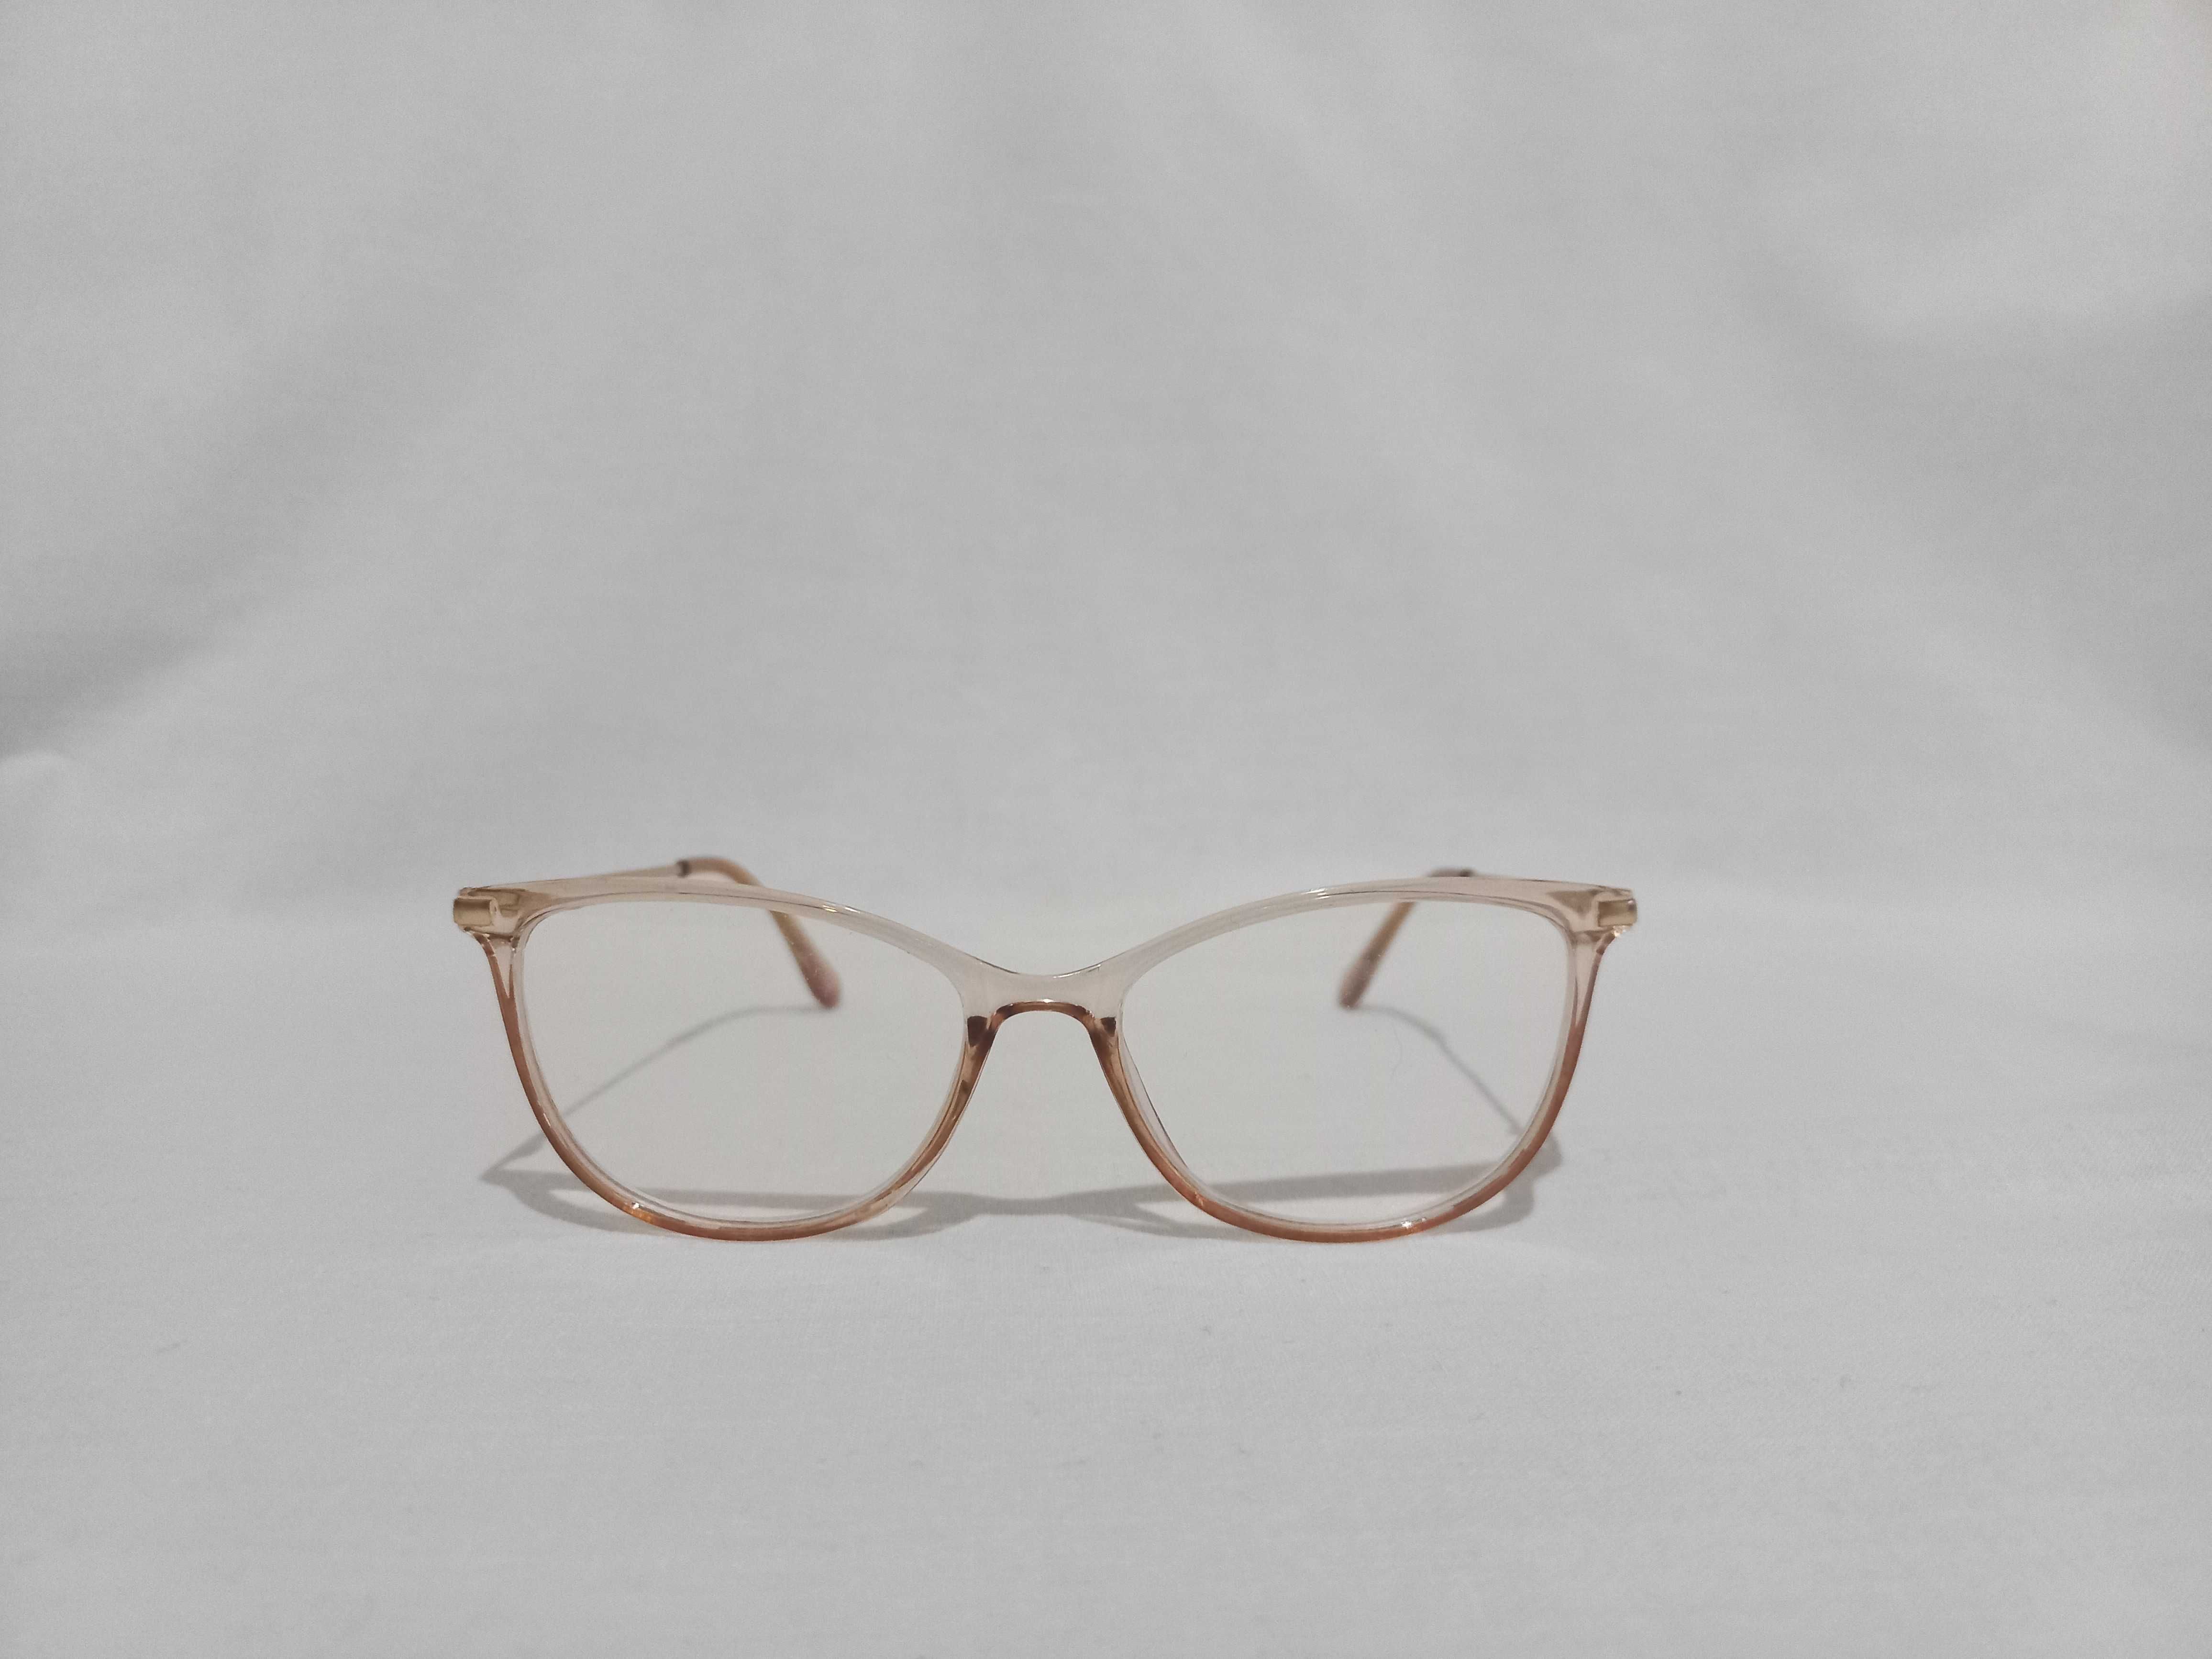 Okulary do czytania +1,0 Brilo transparentne NOWE